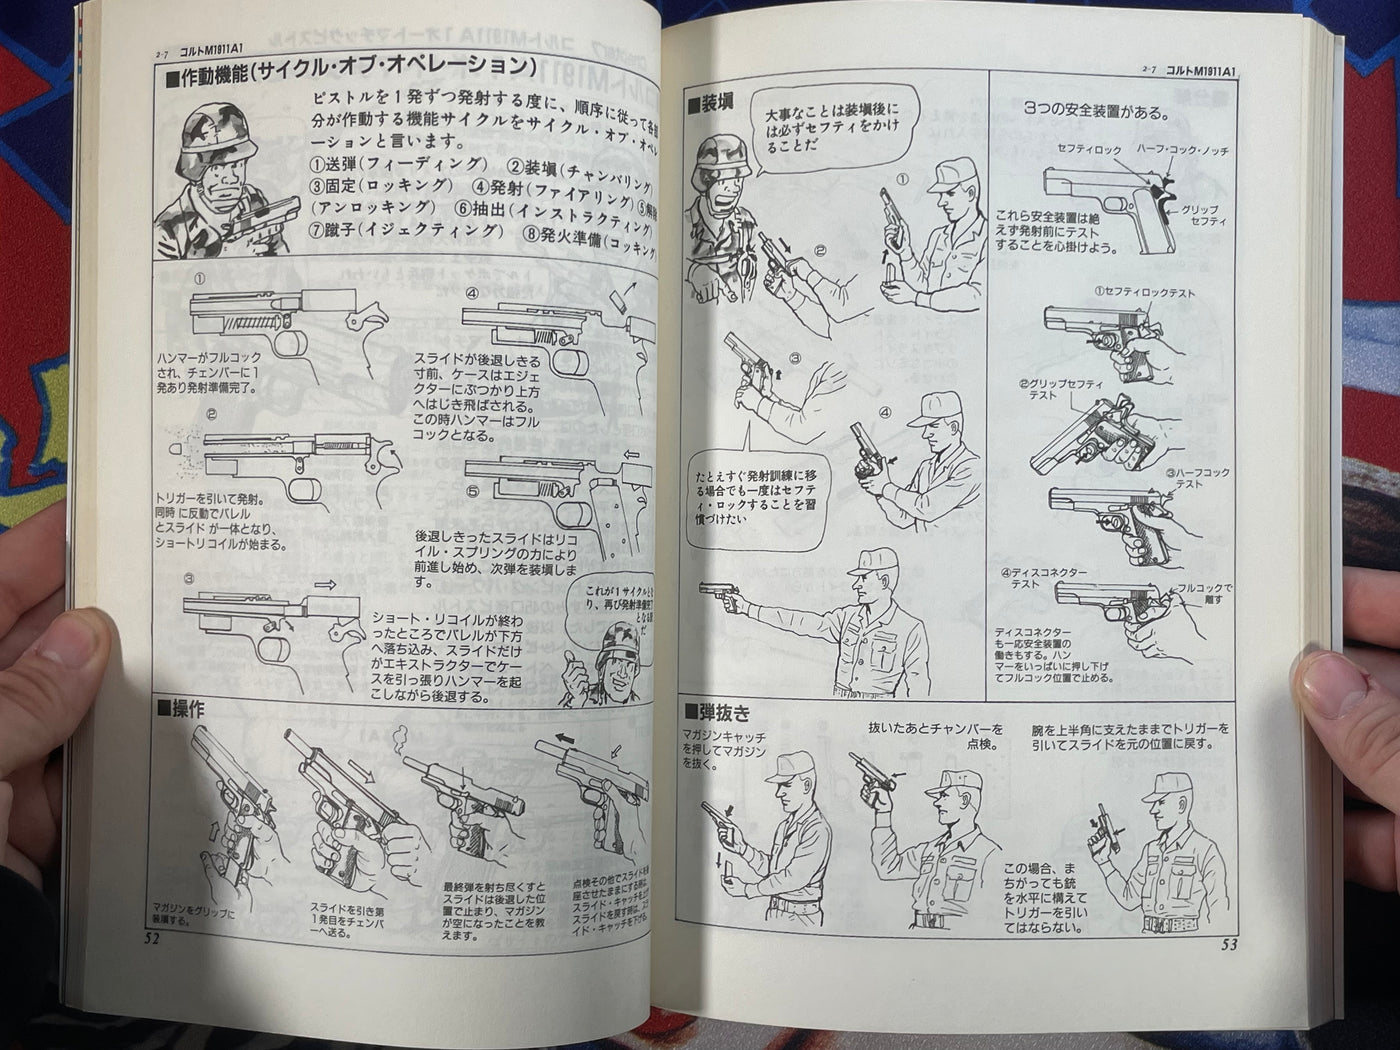 Combat Bible by Shin Ueda (1993)